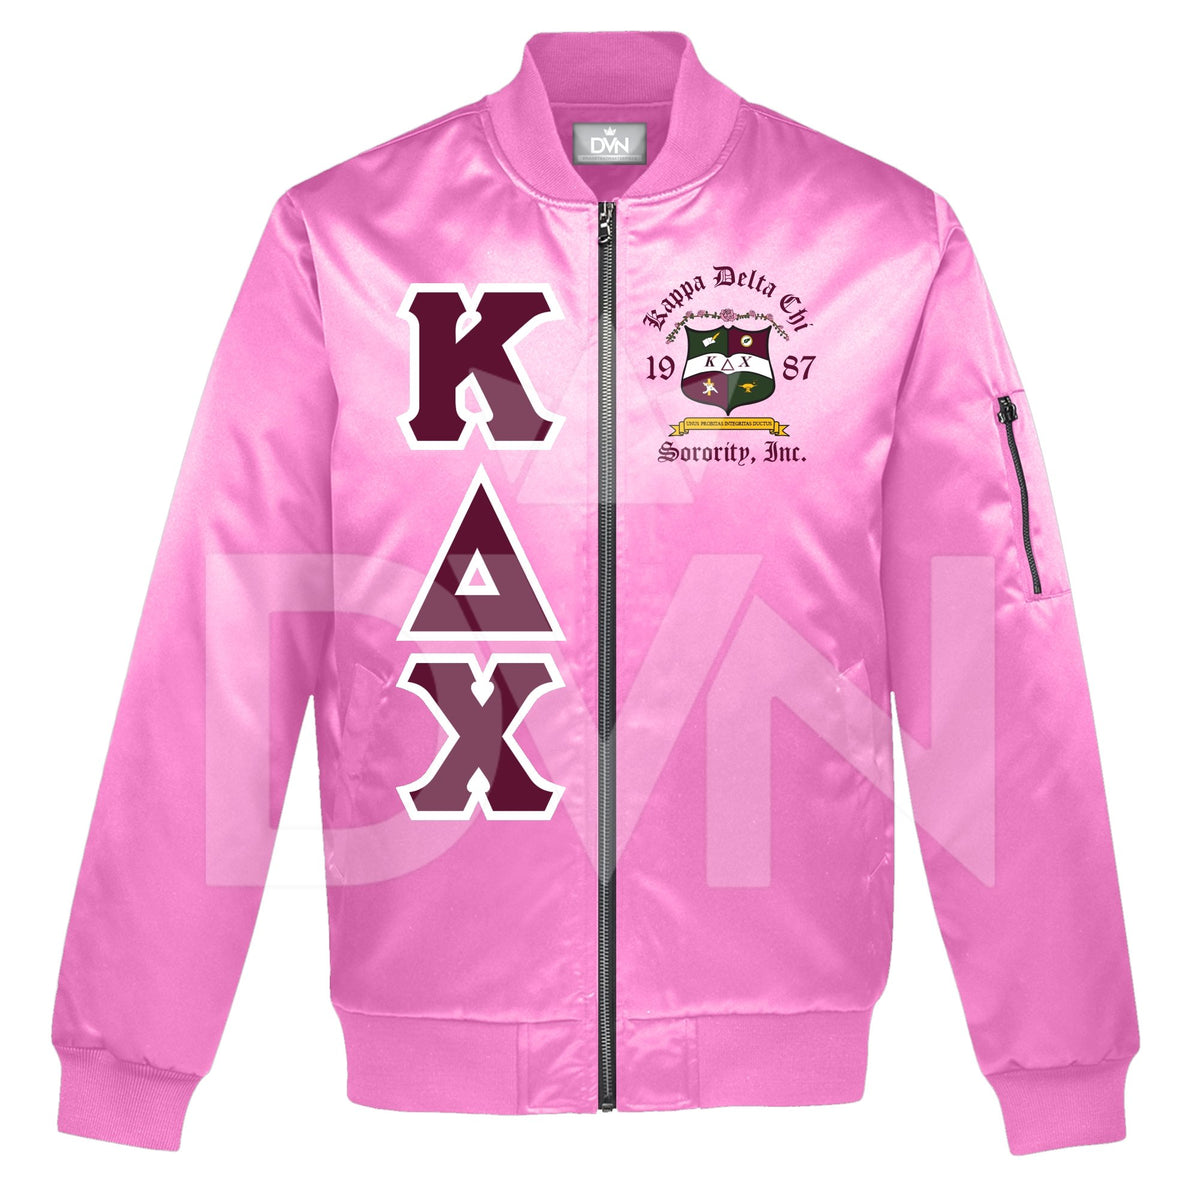 Kappa Delta Chi Bomber Jacket (Custom) - Pink - XS